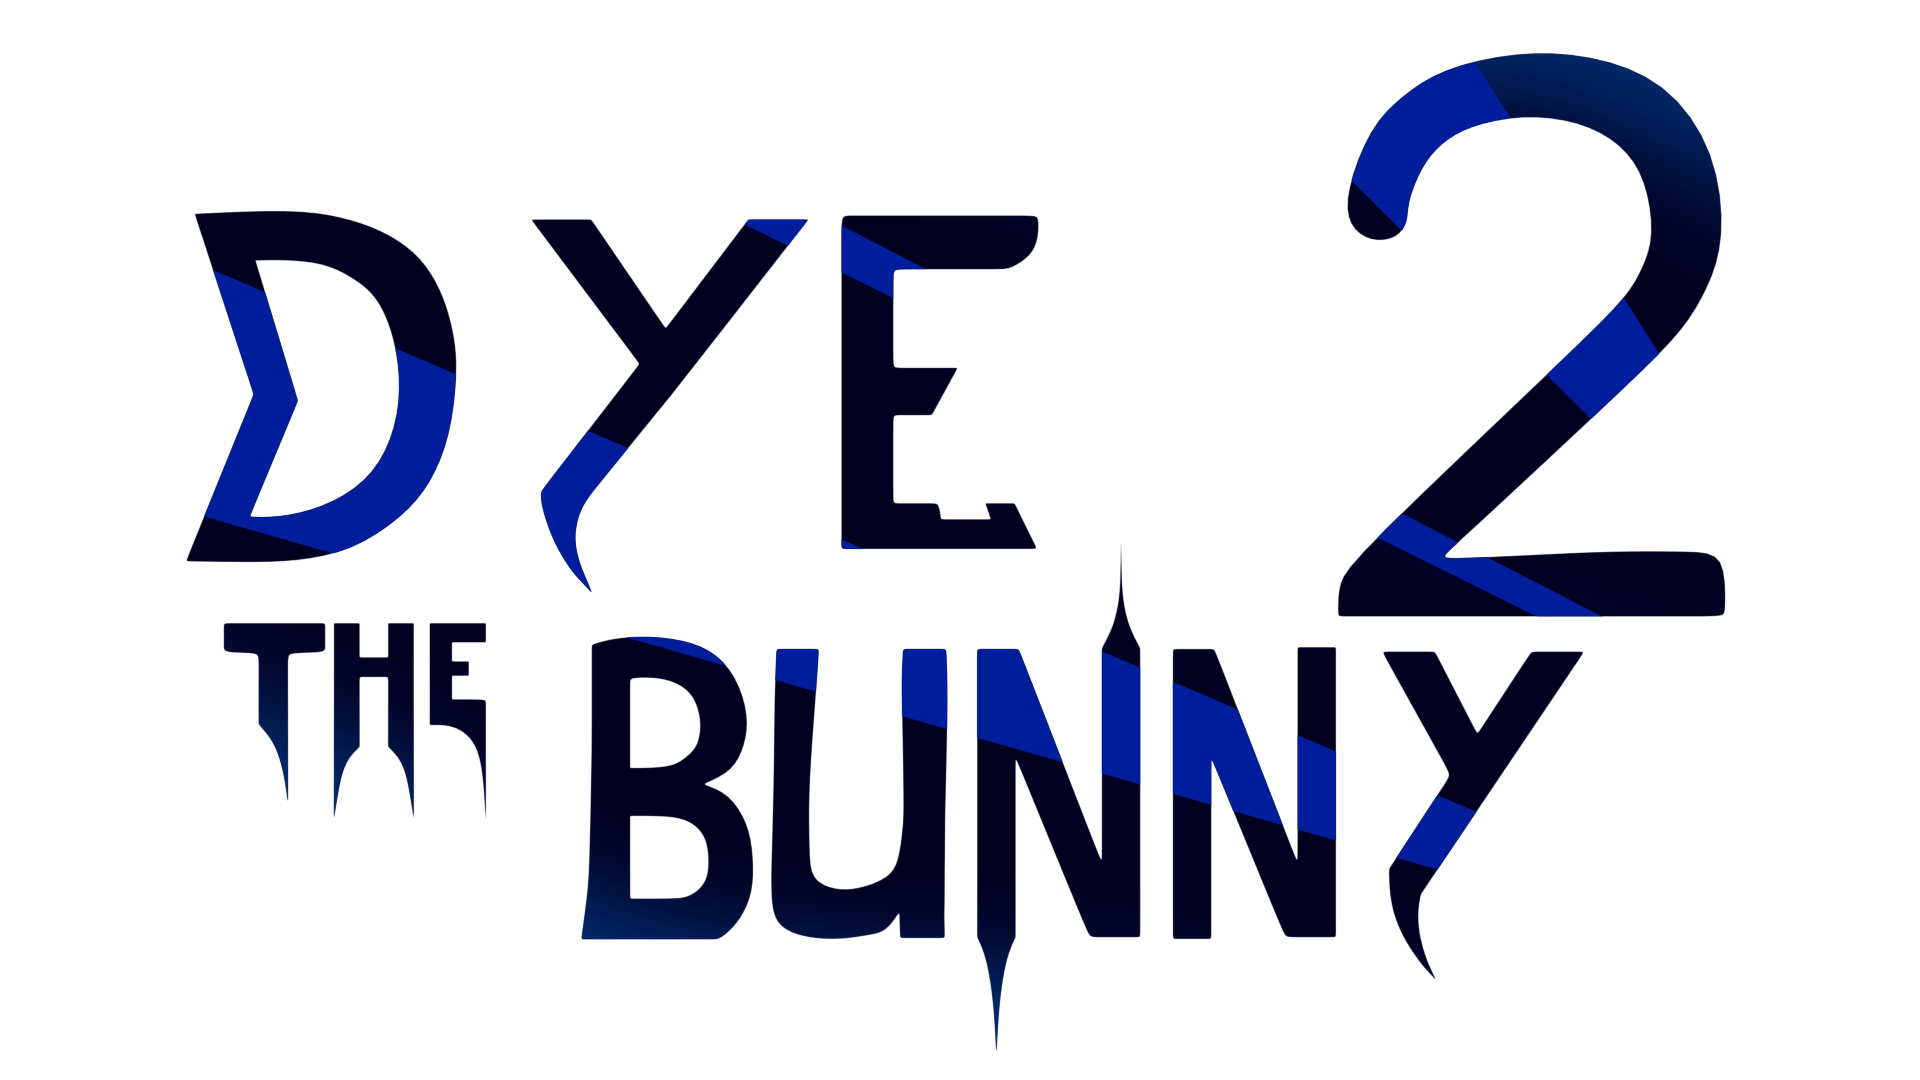 Dye The Bunny 2 - demo